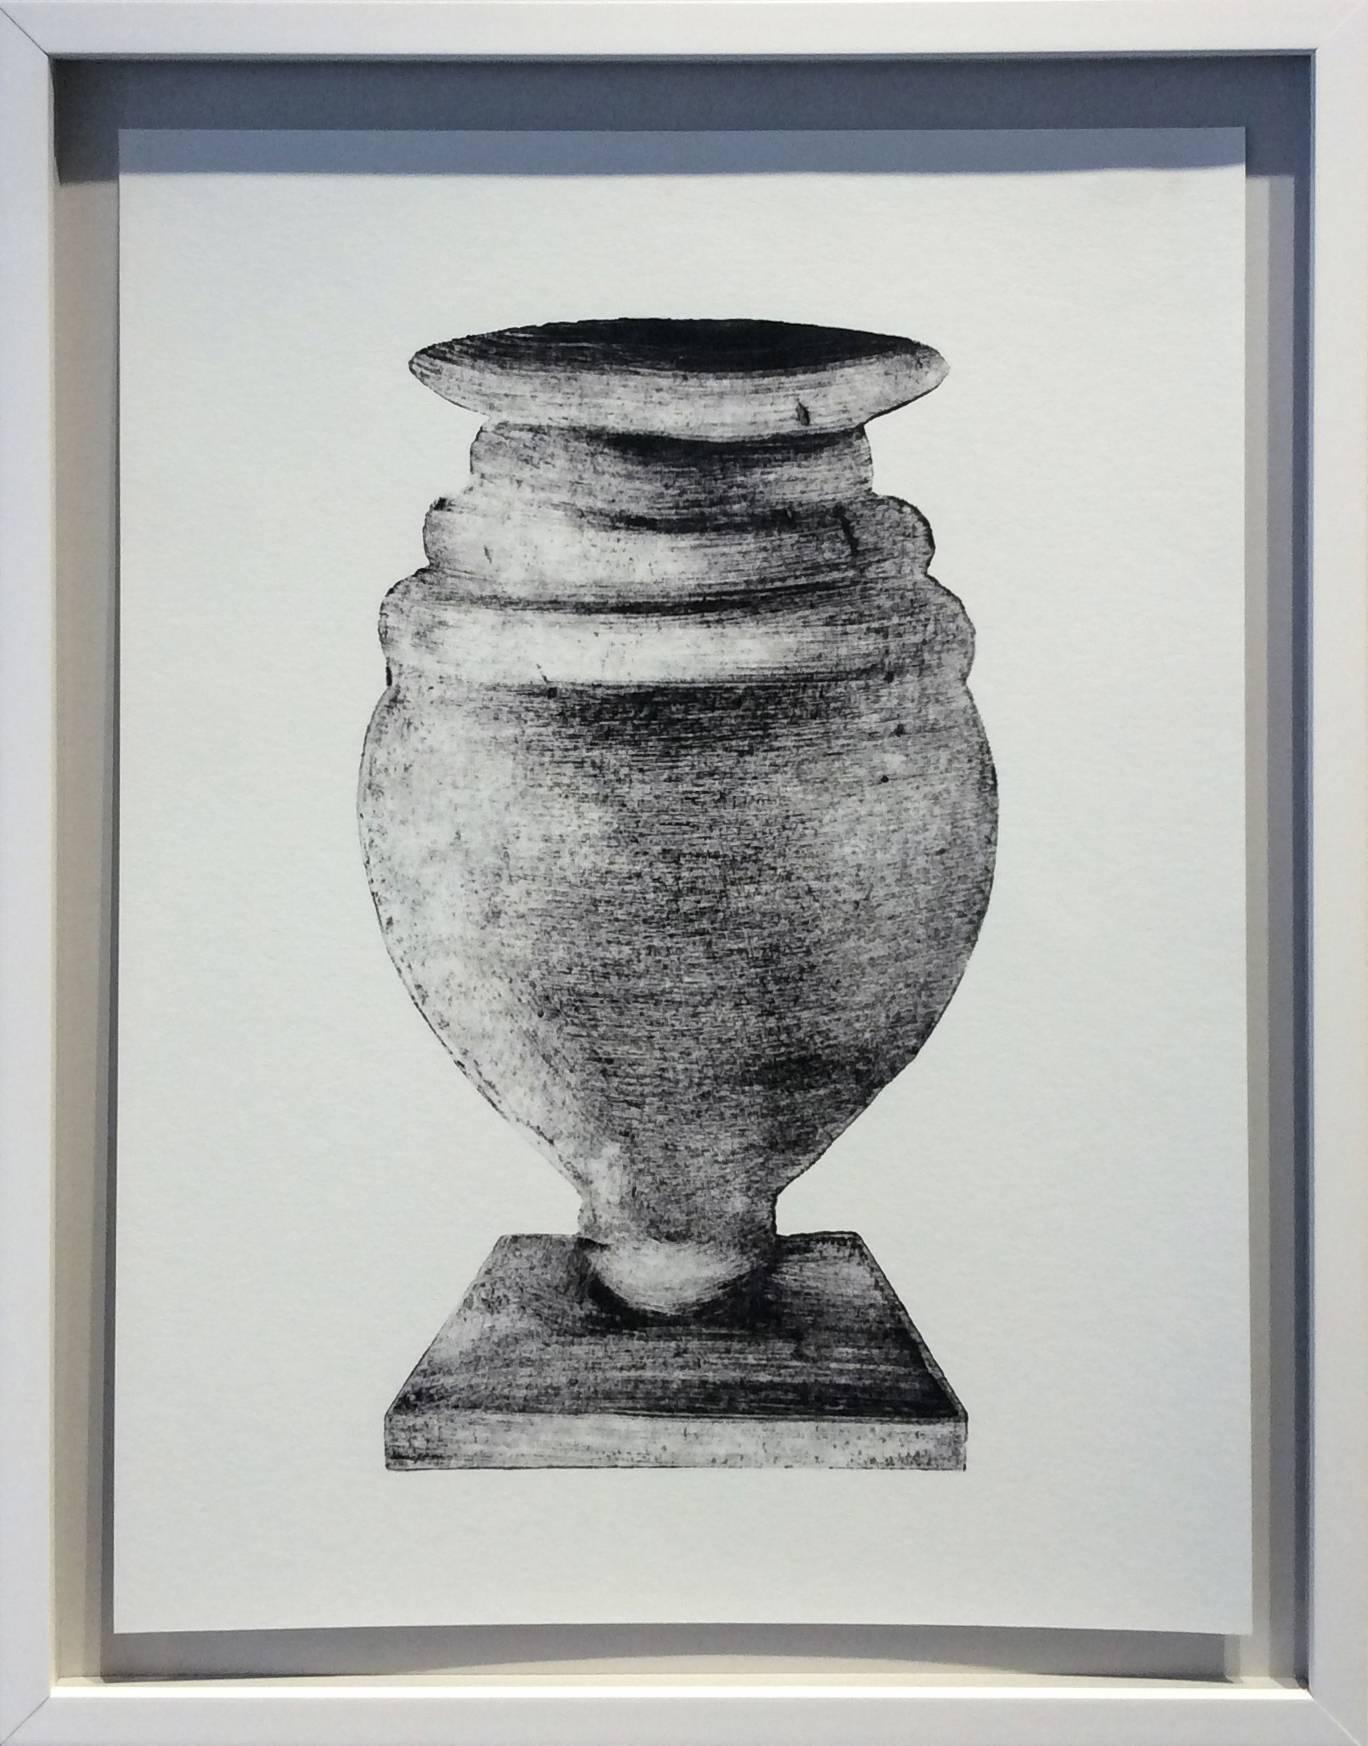 Claire Lofrese Still-Life Print - Morandi Series II - Urn (Modern, Black and White Still Life Print, Framed)